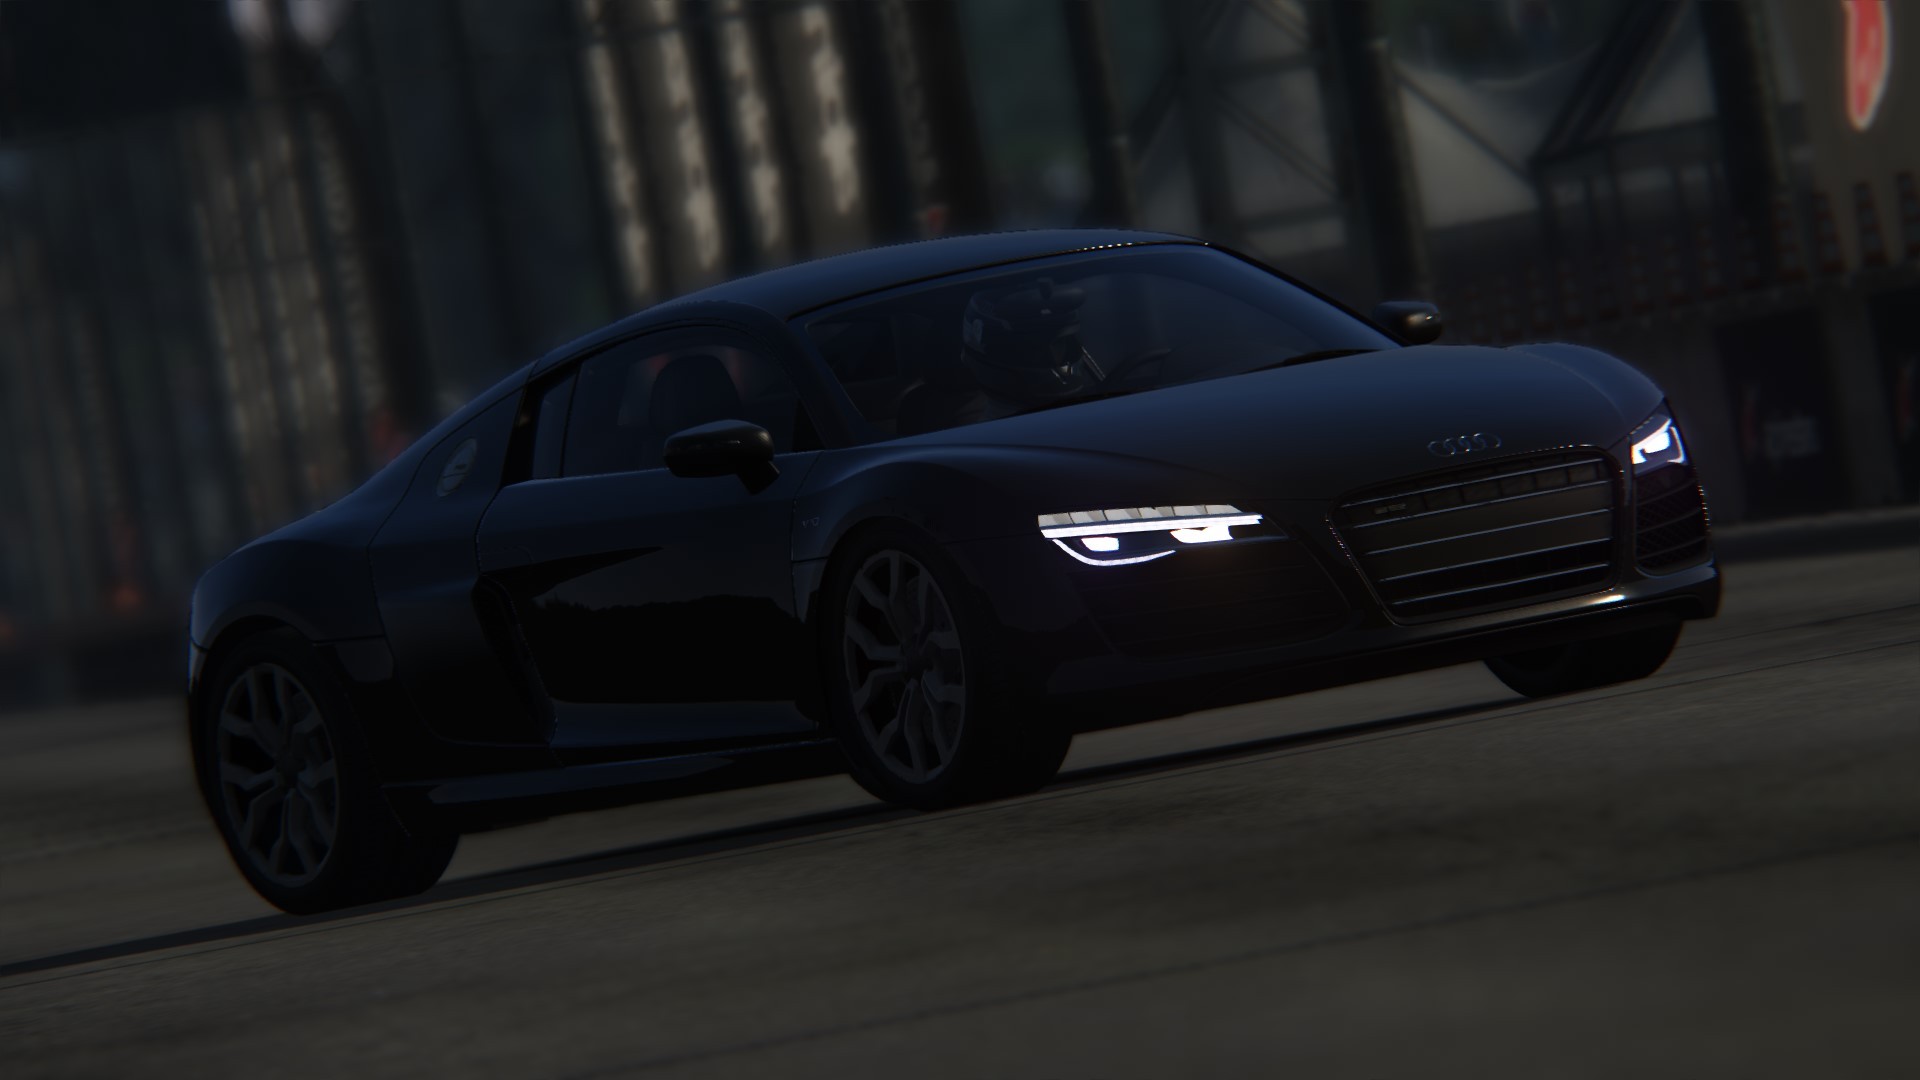 Audi, Assetto Corsa, Drag, Video Games, Car, Vehicle Wallpaper